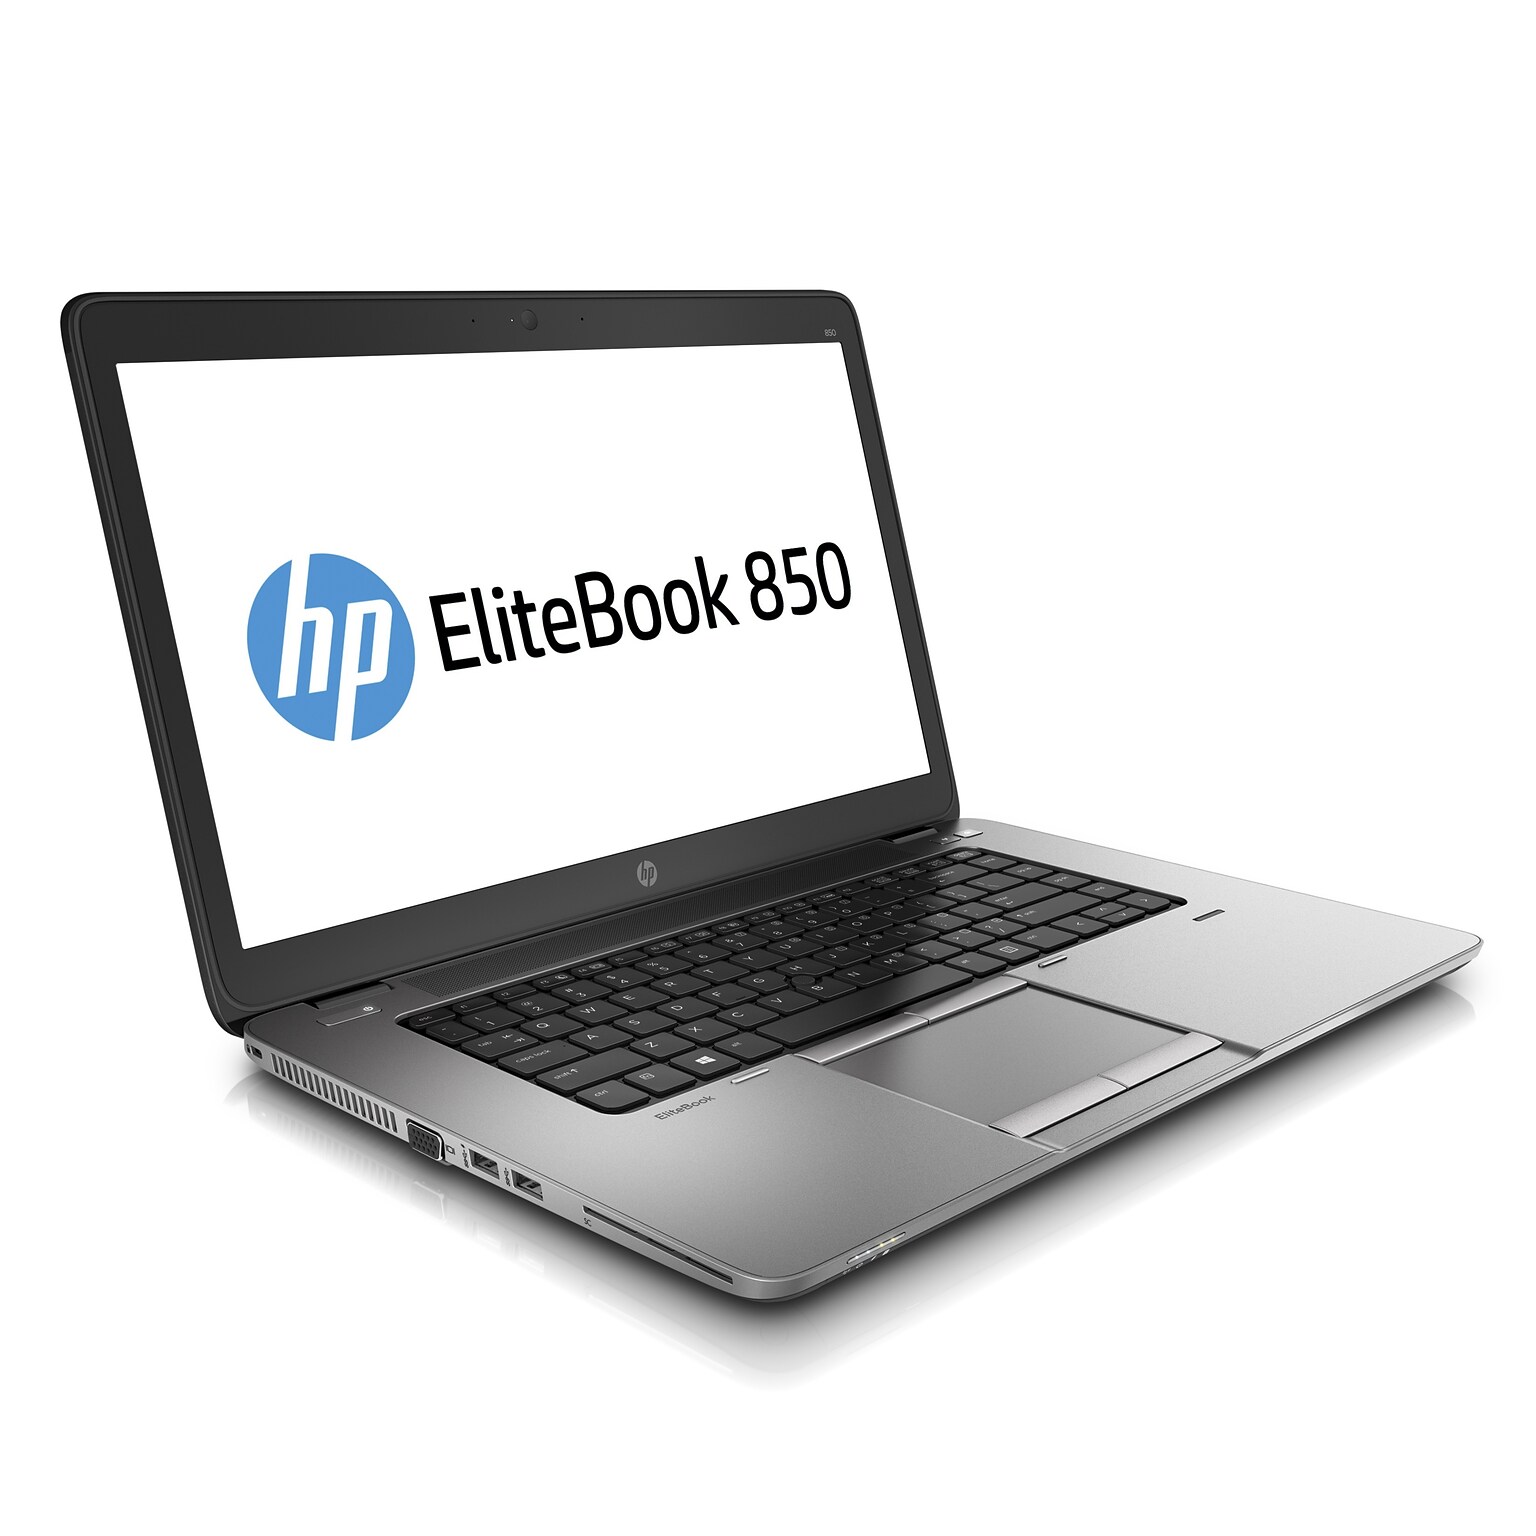 HP EliteBook 850G1 15.6 Refurbished Laptop, Intel i5(4300U) 1.9GHz Processor, 8GB Memory, 128GB SSD, Windows 10 Pro